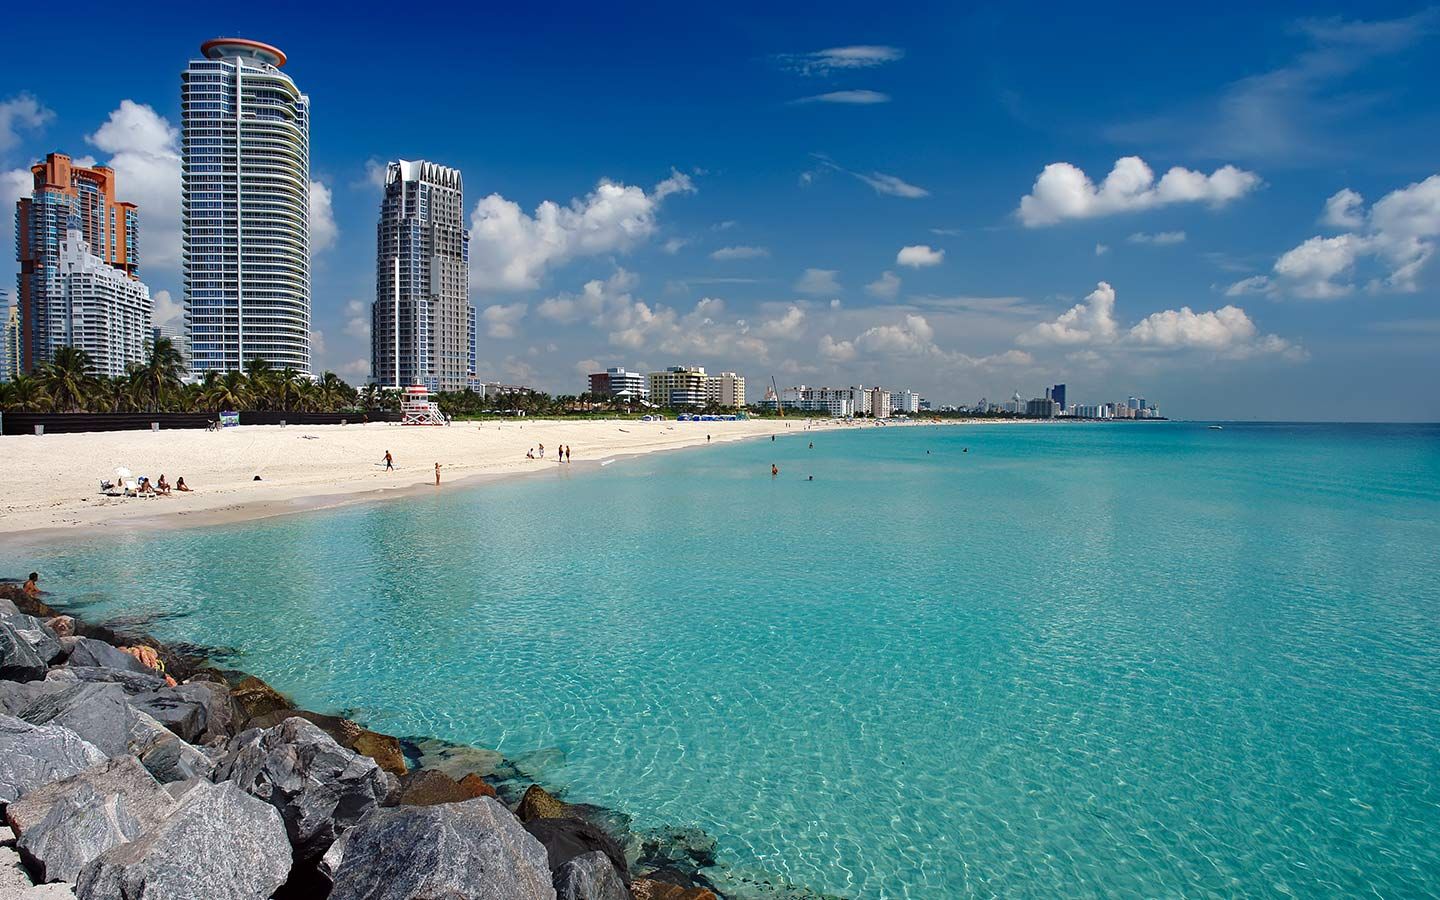 Miami Beaches in a normal sunny day!.